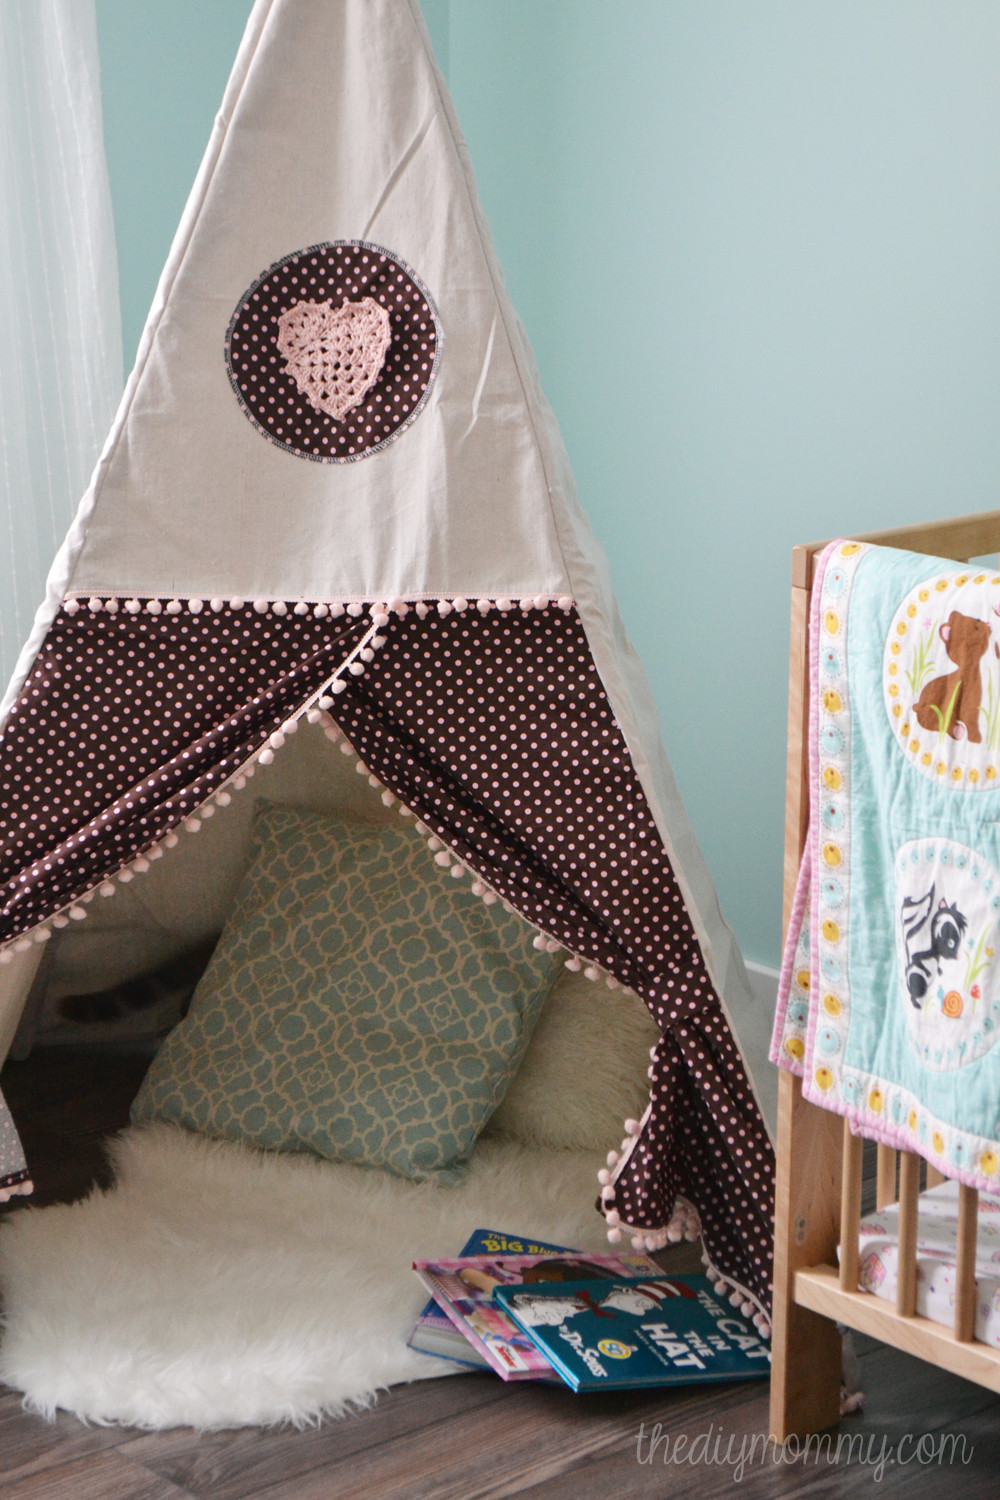 DIY Kids Teepee Tent
 Sew a DIY Teepee Play Tent